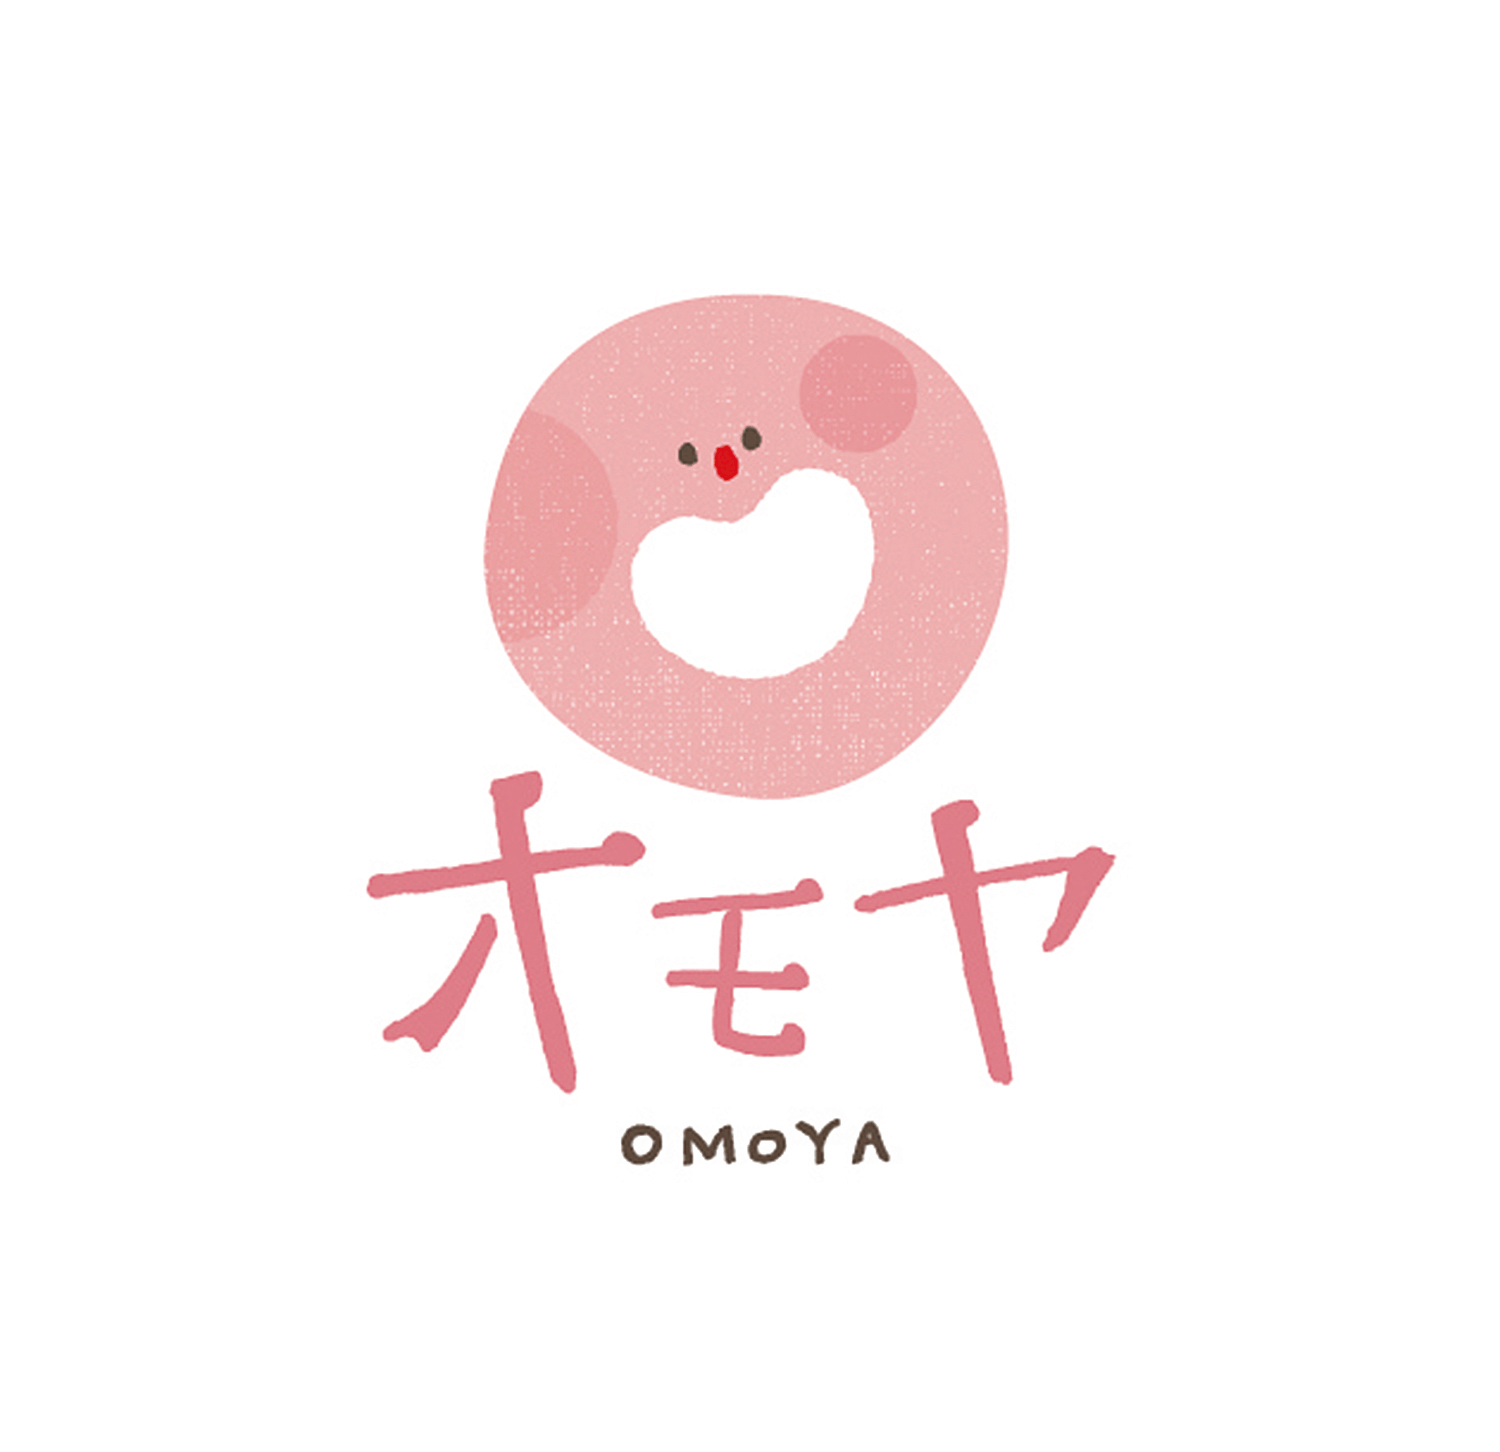 omoya　ロゴの画像